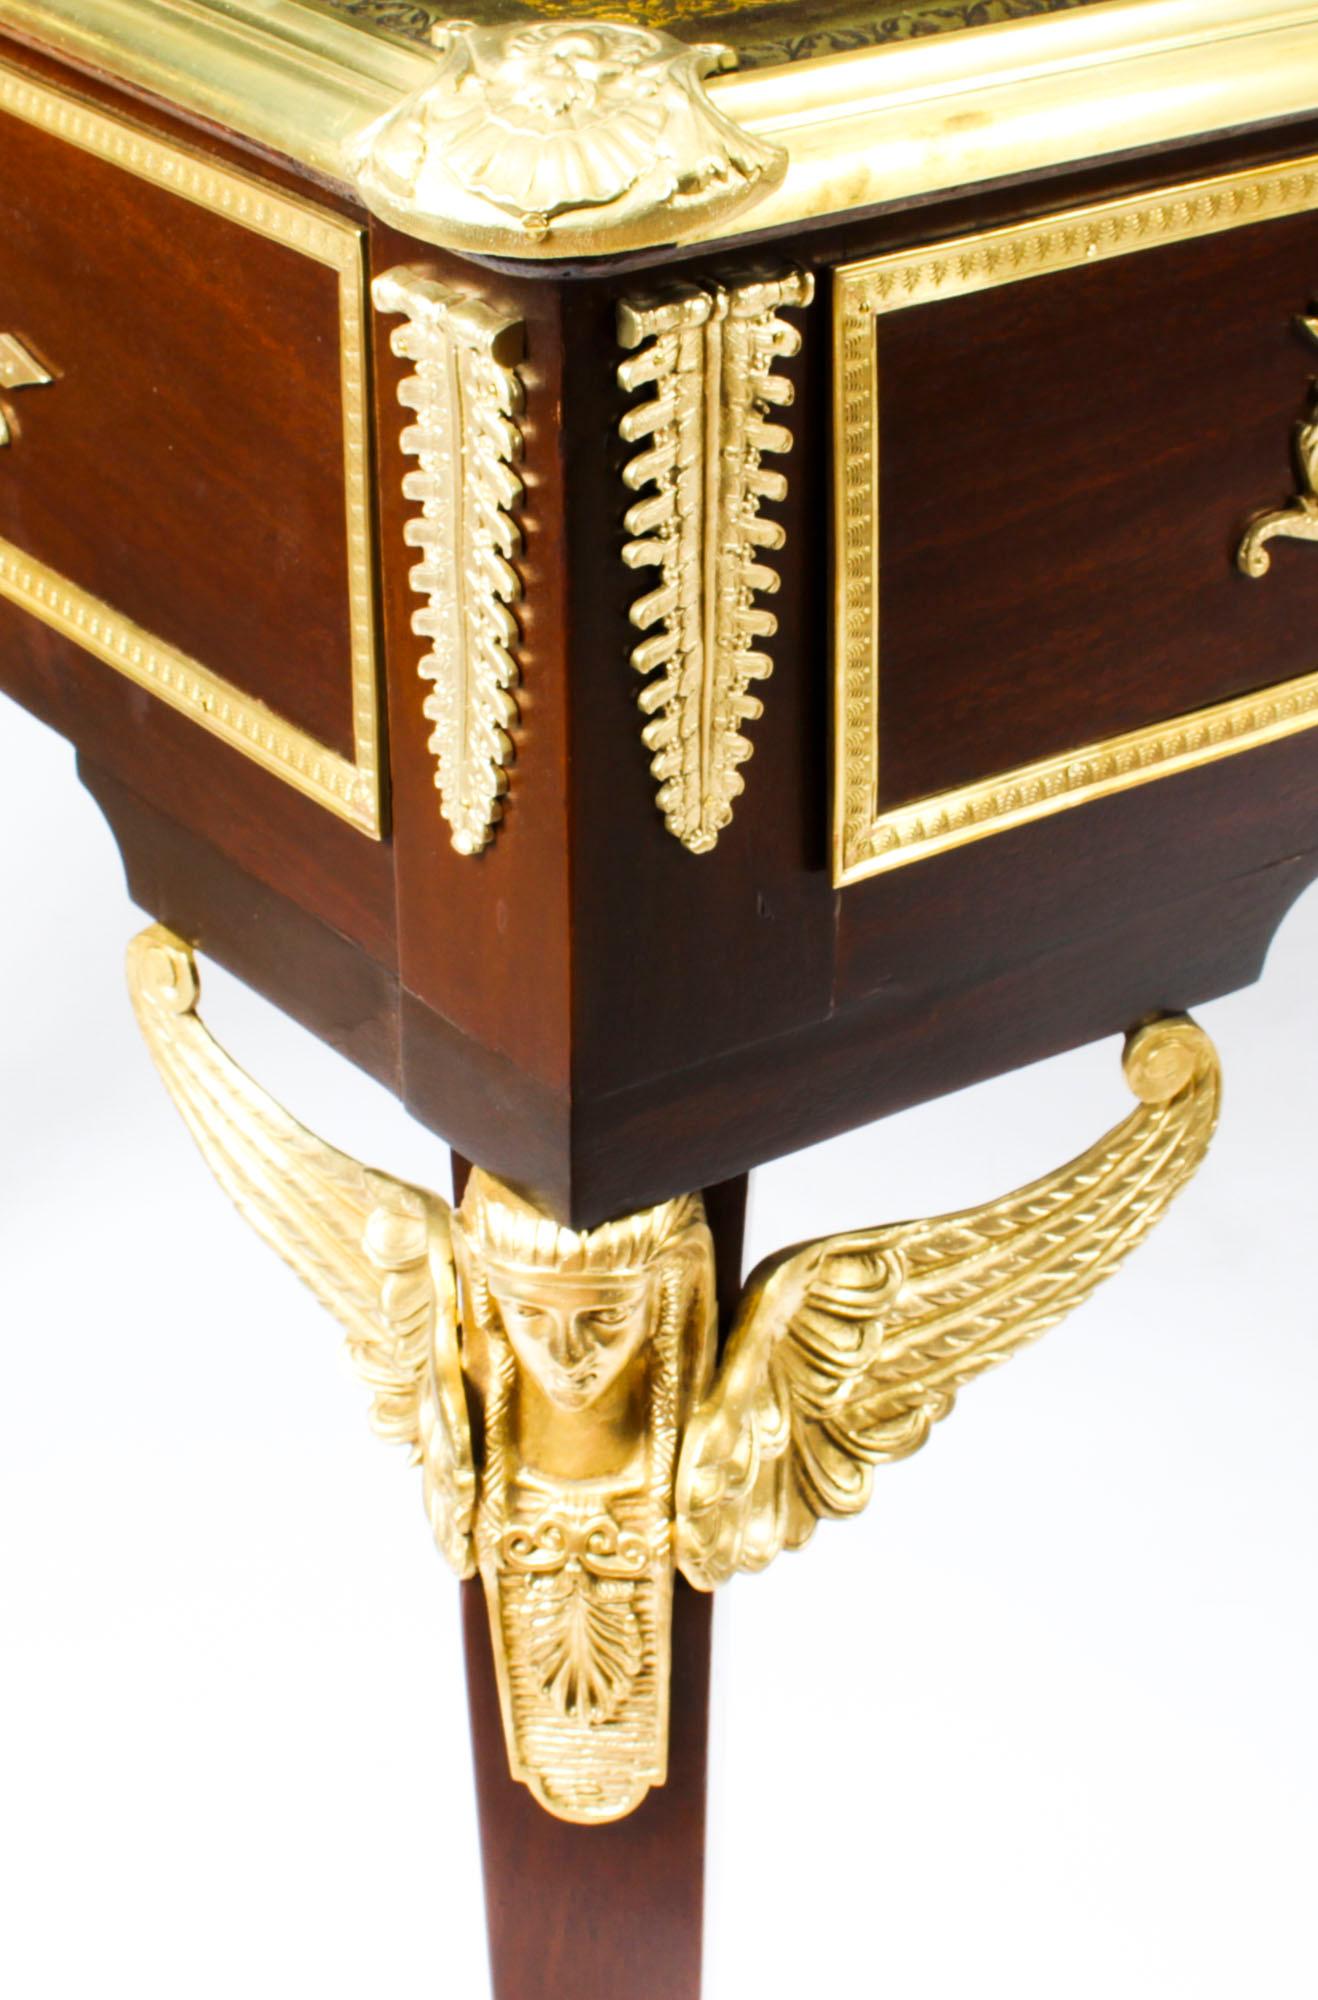 Antique Monumental French Empire Bureau Plat Desk Writing Table, 19th Century For Sale 3